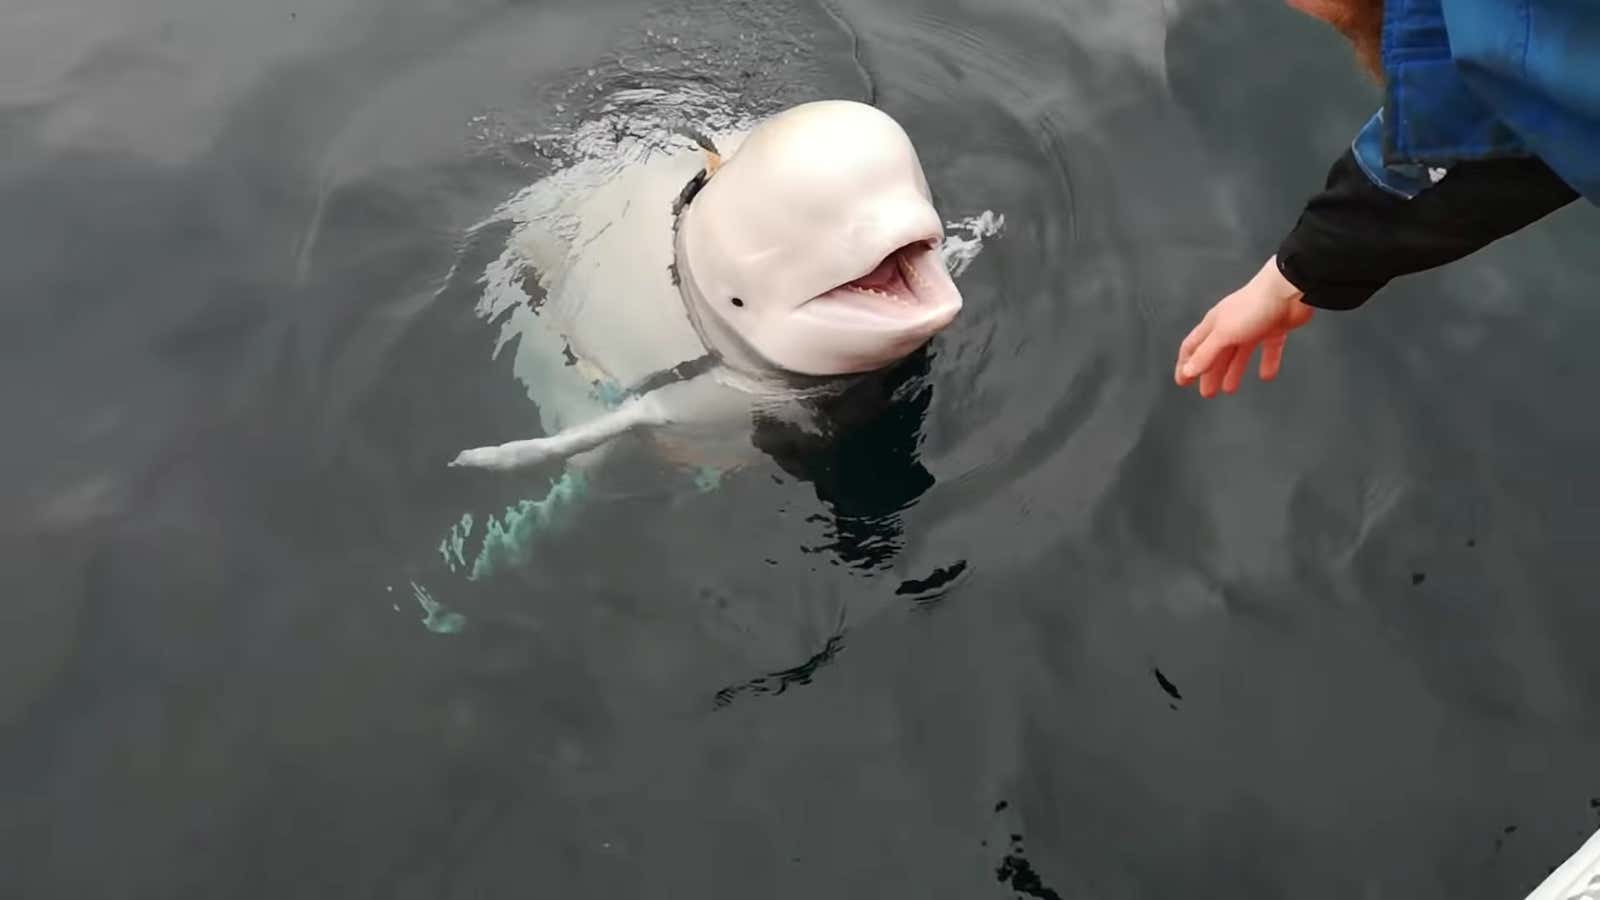 The Story of Beluga (Full Story) 